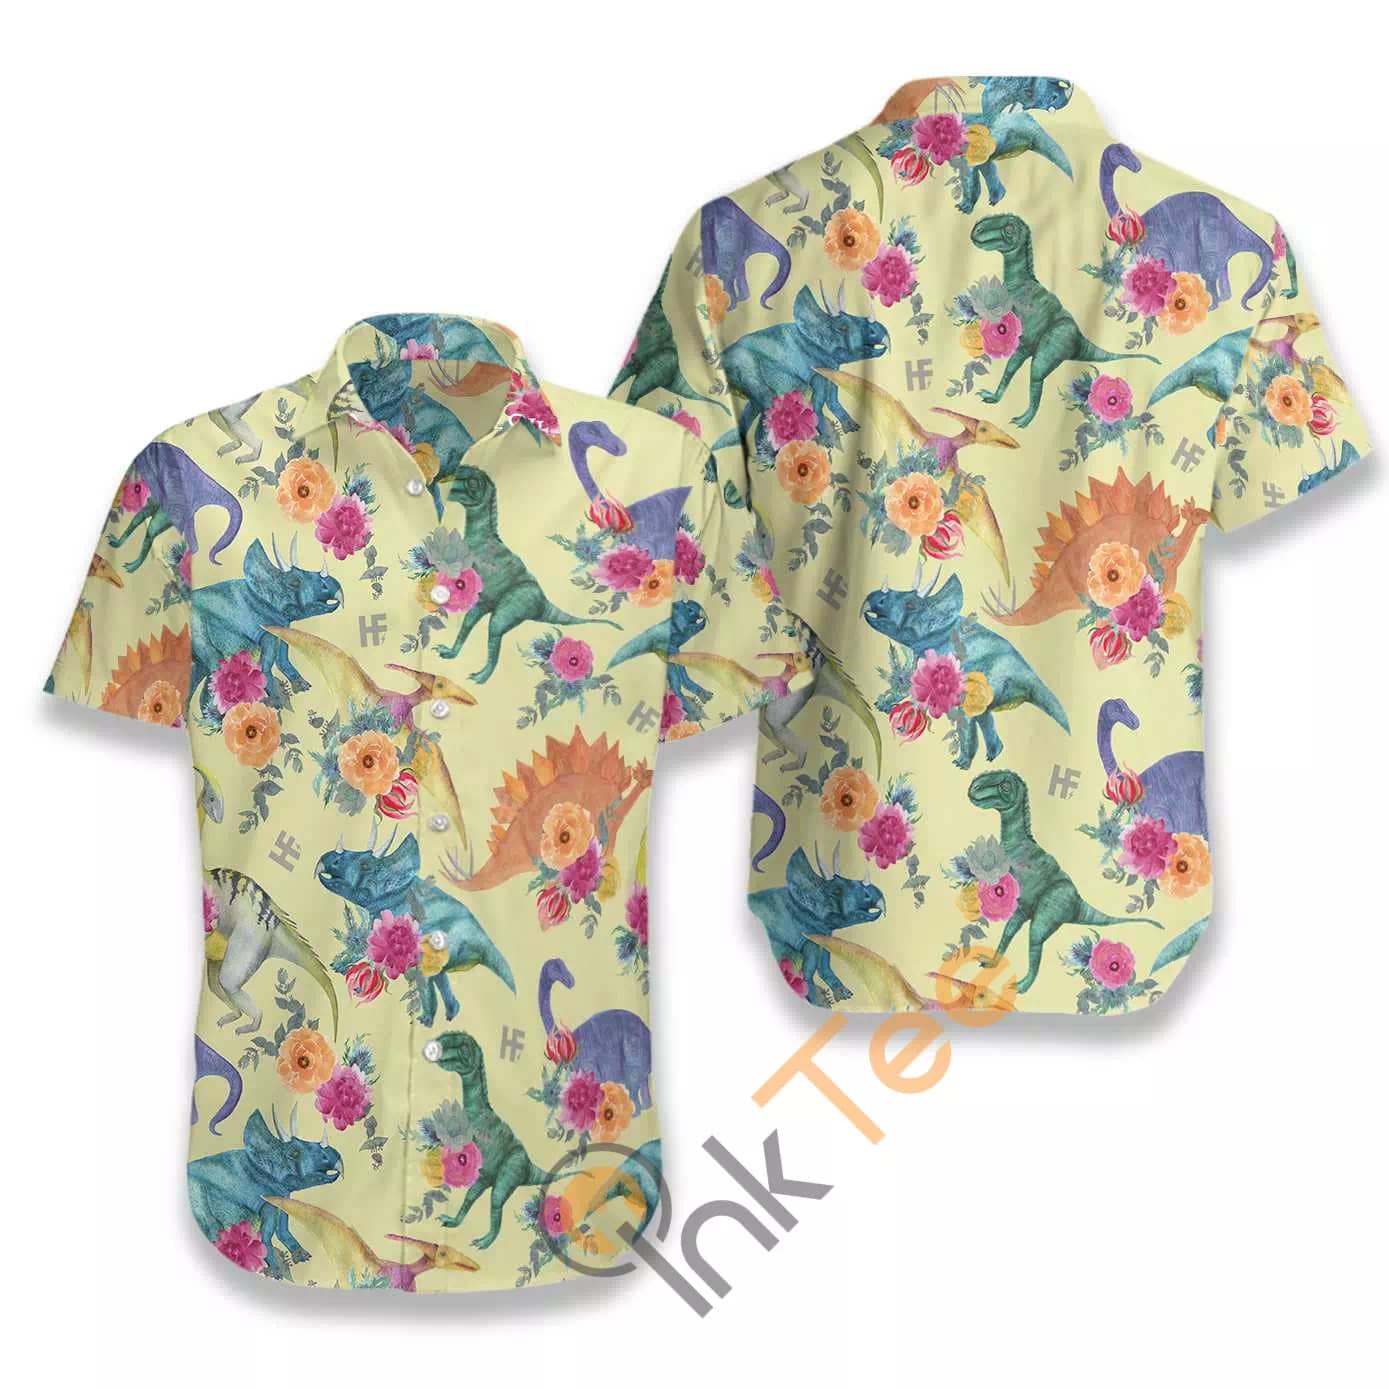 Floral Dinosaurs N563 Hawaiian shirts